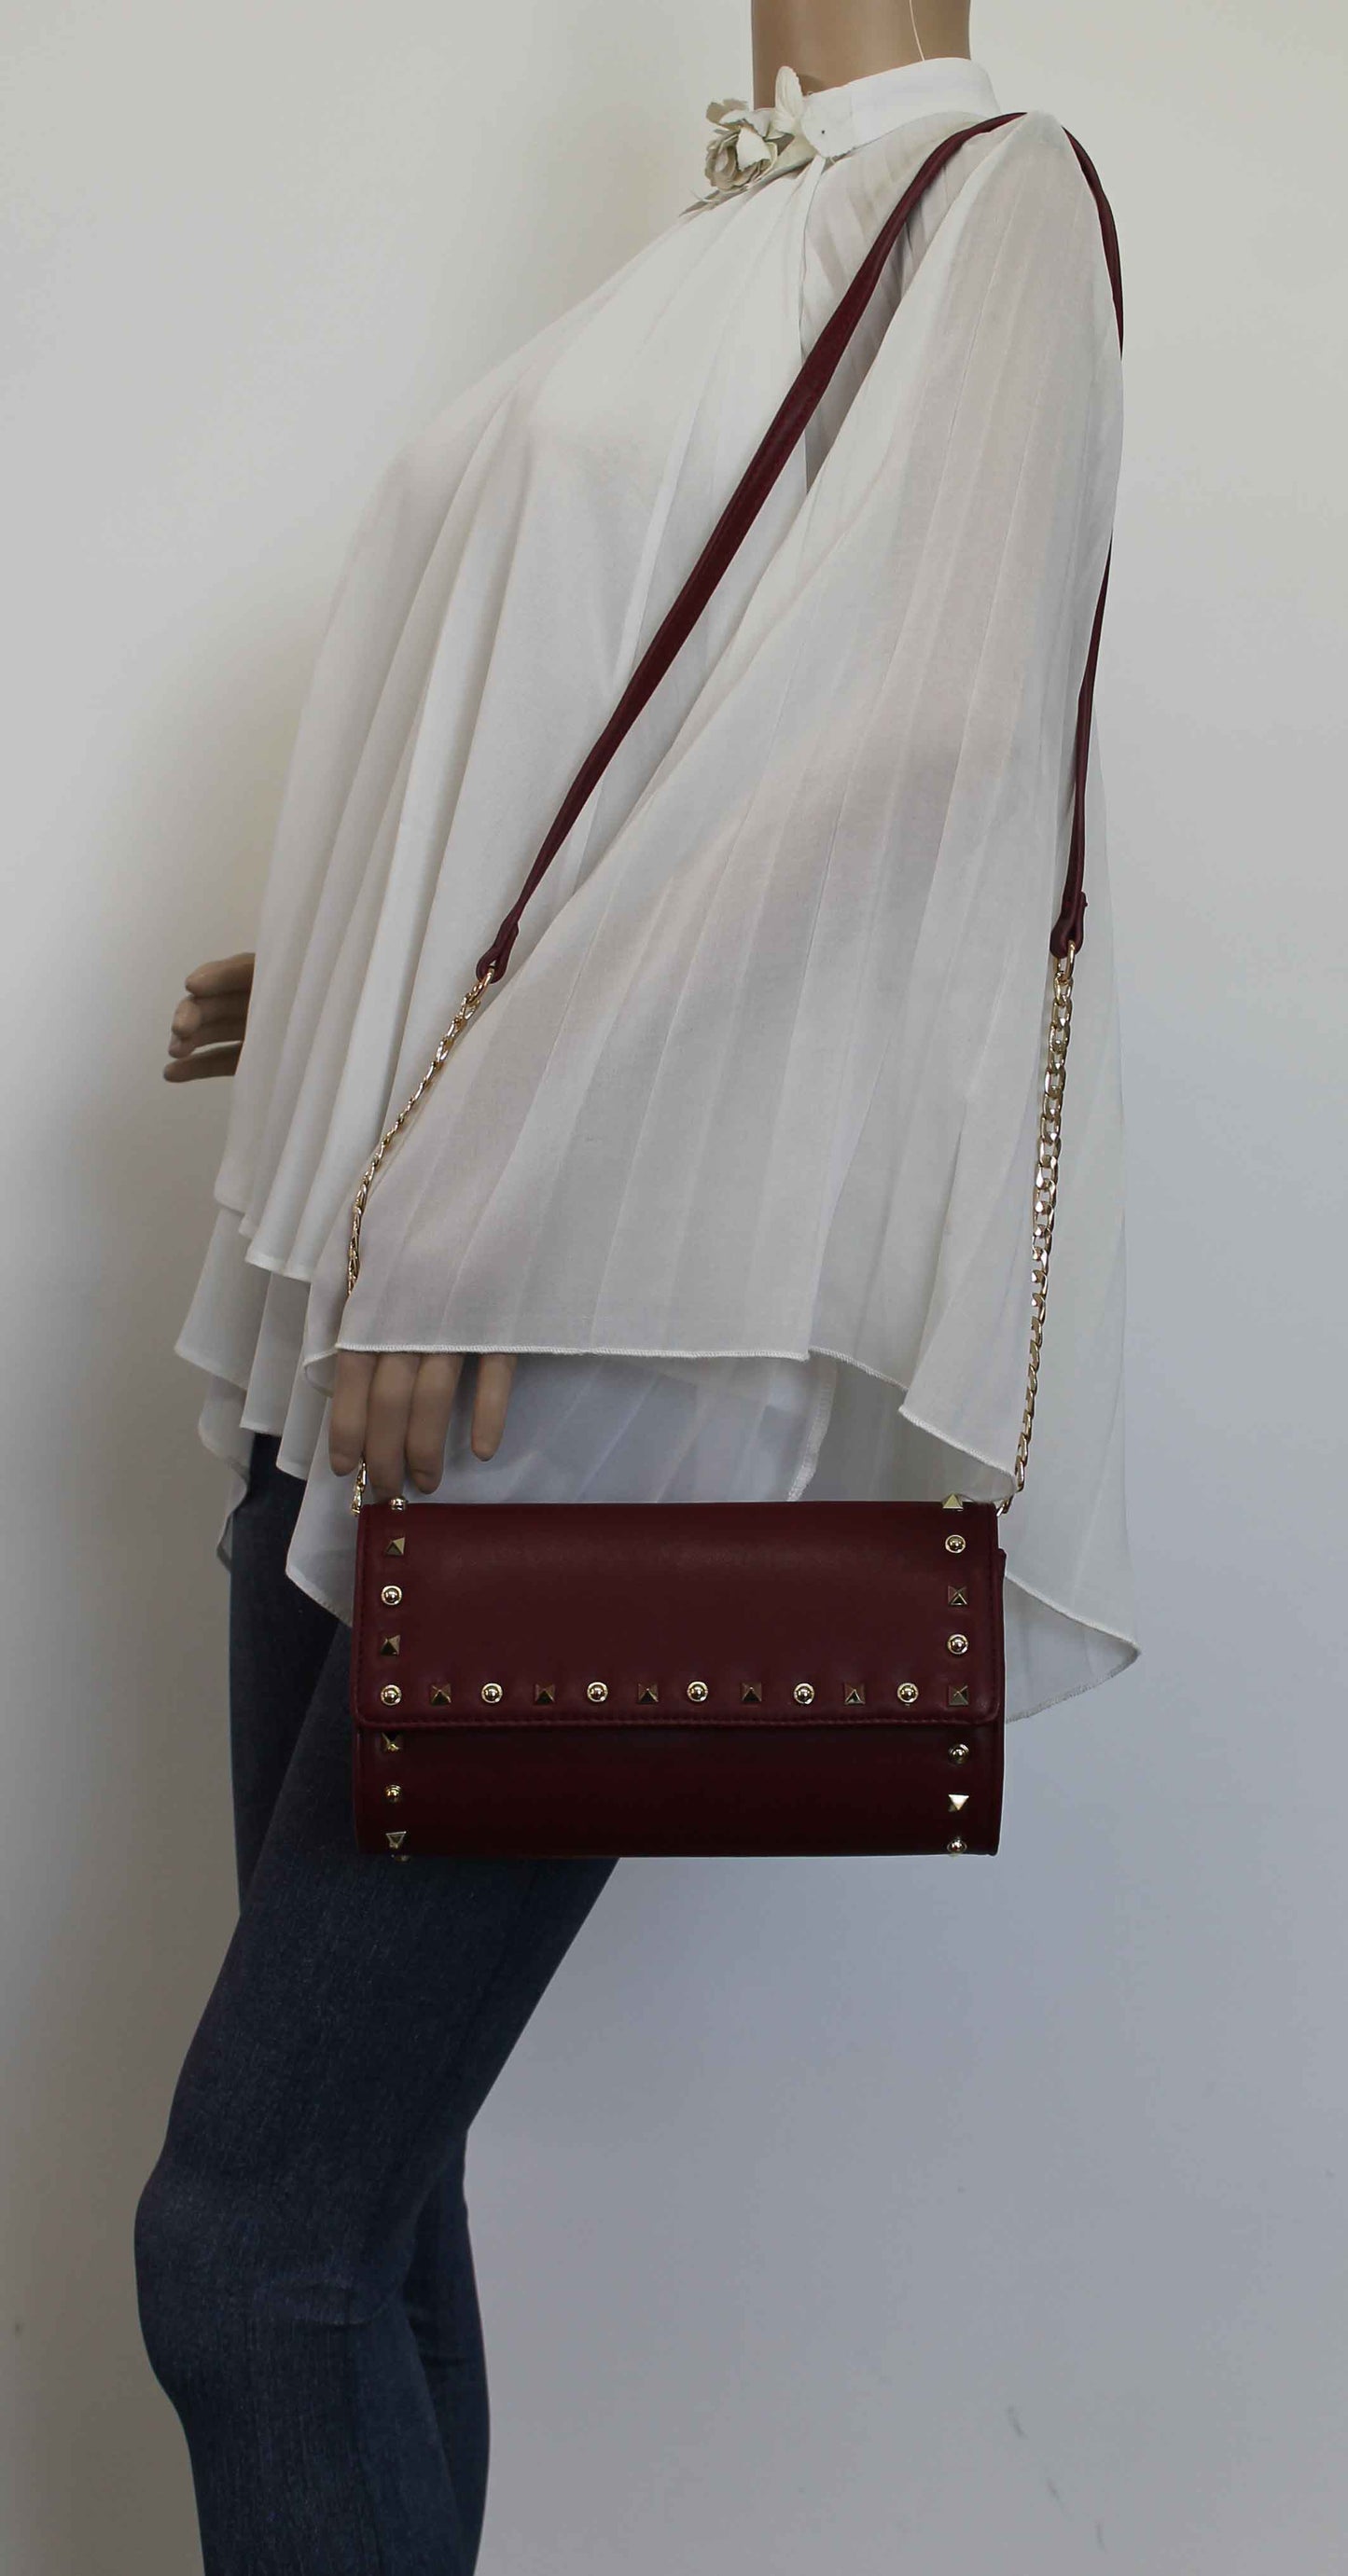 SWANKYSWANS Katie Clutch Bag Burgundy Cute Cheap Clutch Bag For Weddings School and Work